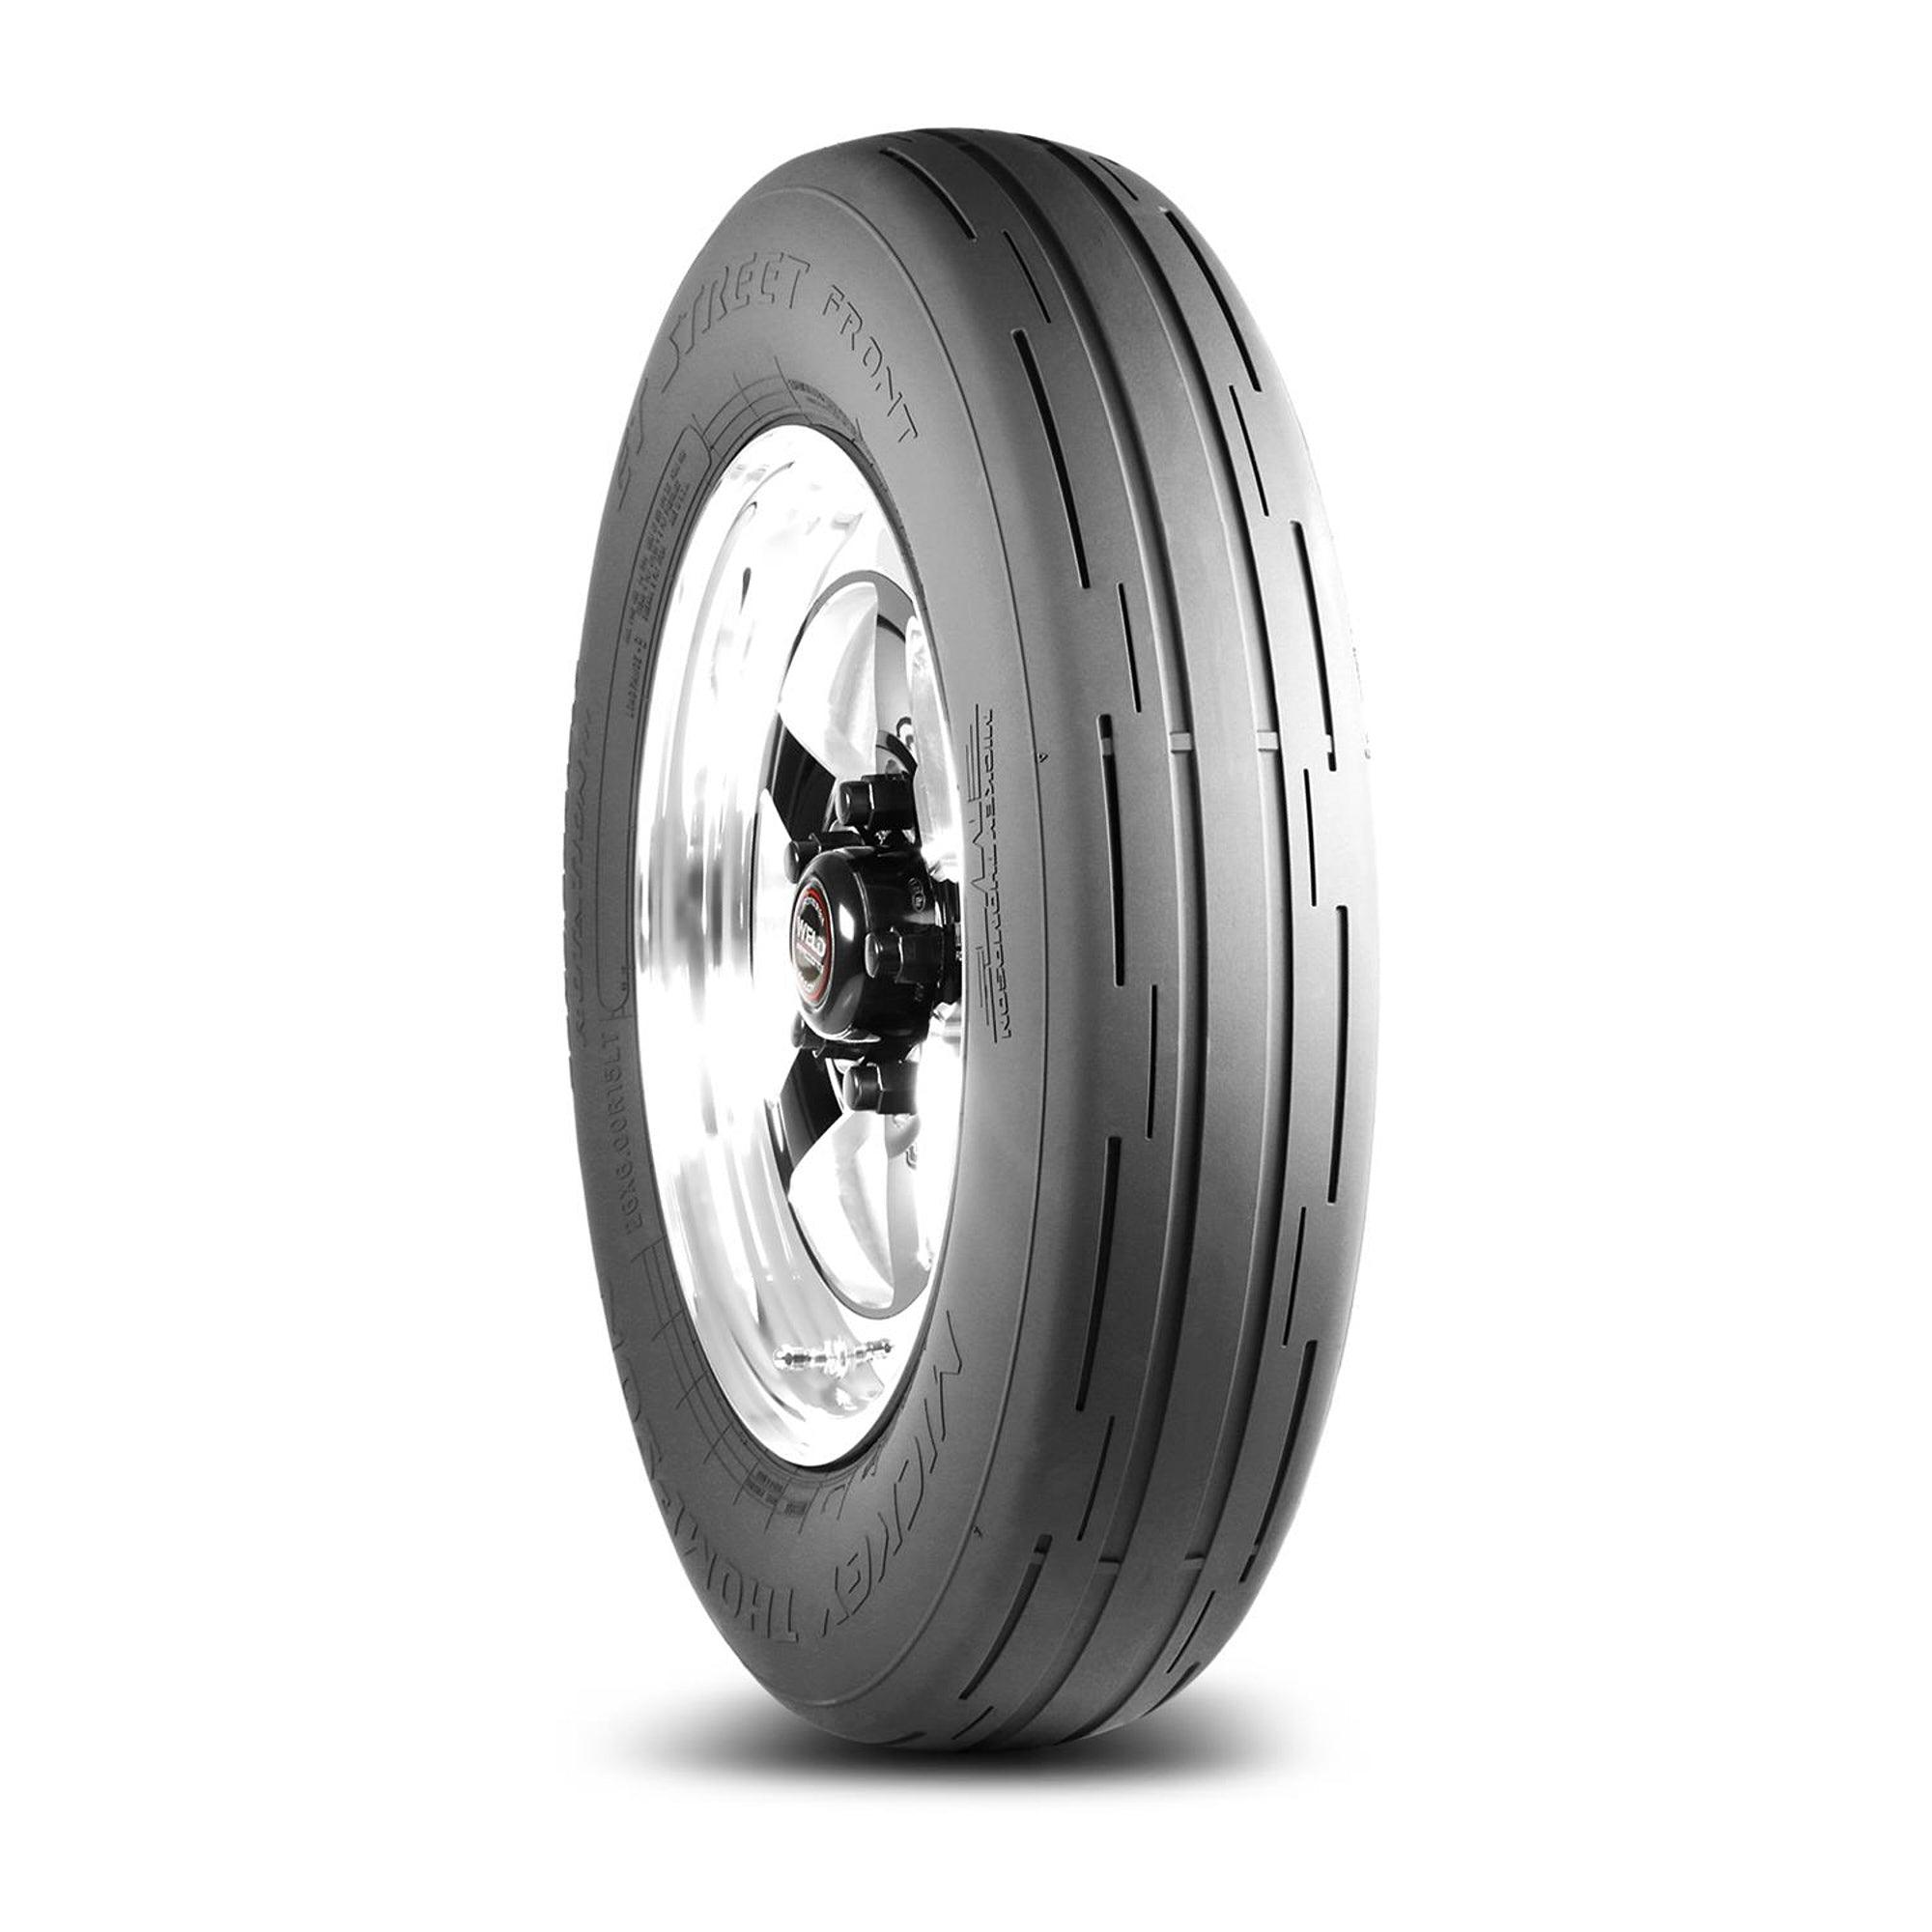 ET Sreet Radial Front Tire 26x6.00R15LT - Burlile Performance Products